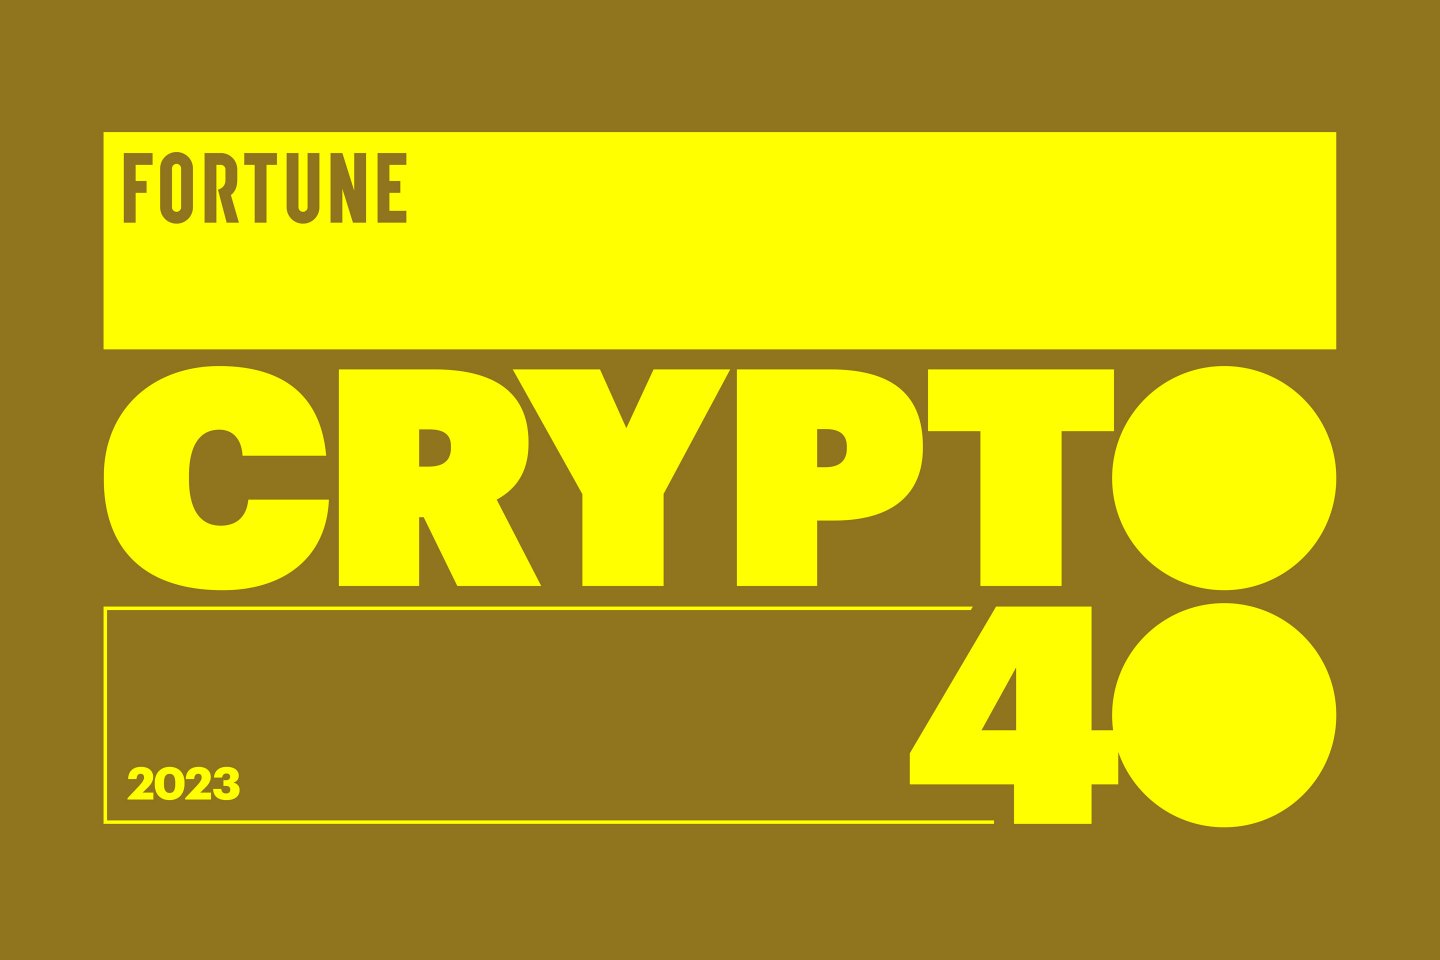 Fortune Crypto 40 logo